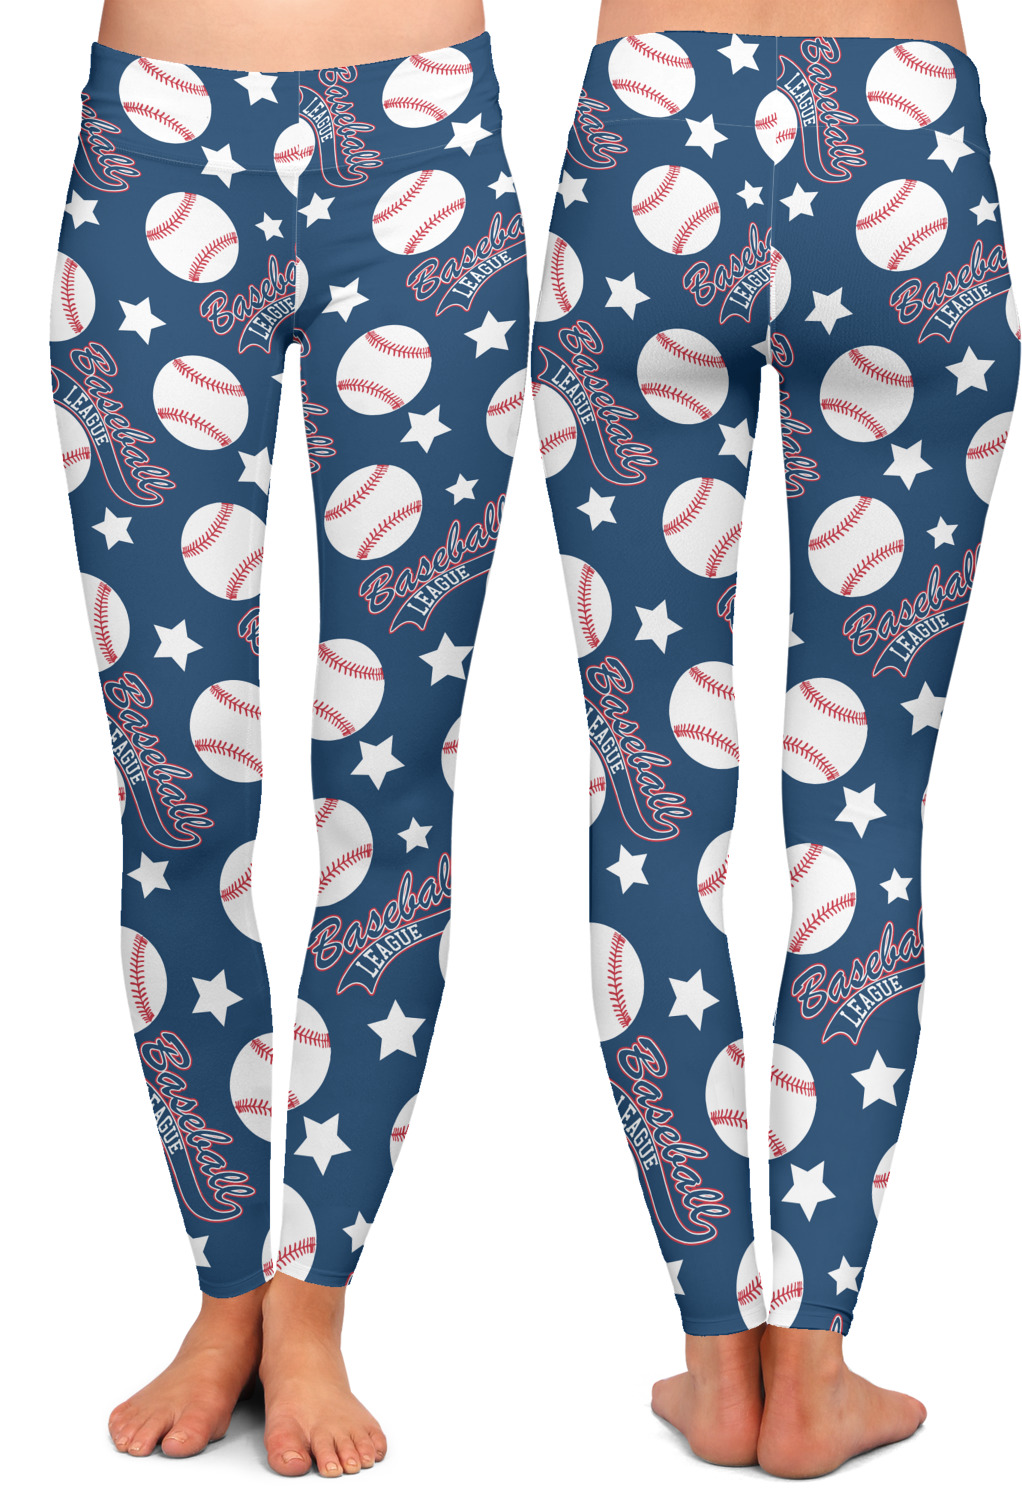 Baseball Ladies Leggings (Personalized) - YouCustomizeIt